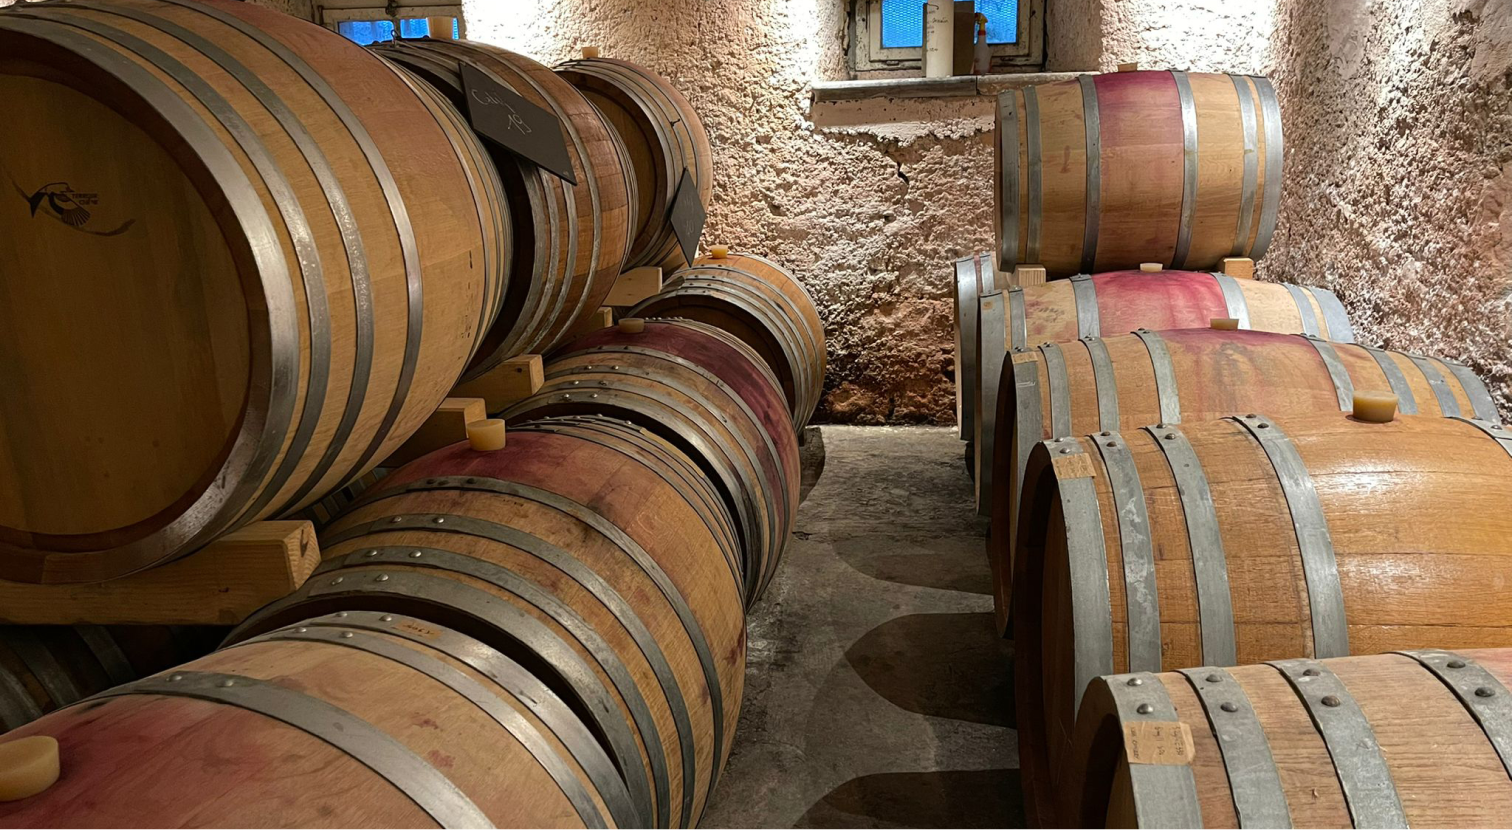 A wine cellar